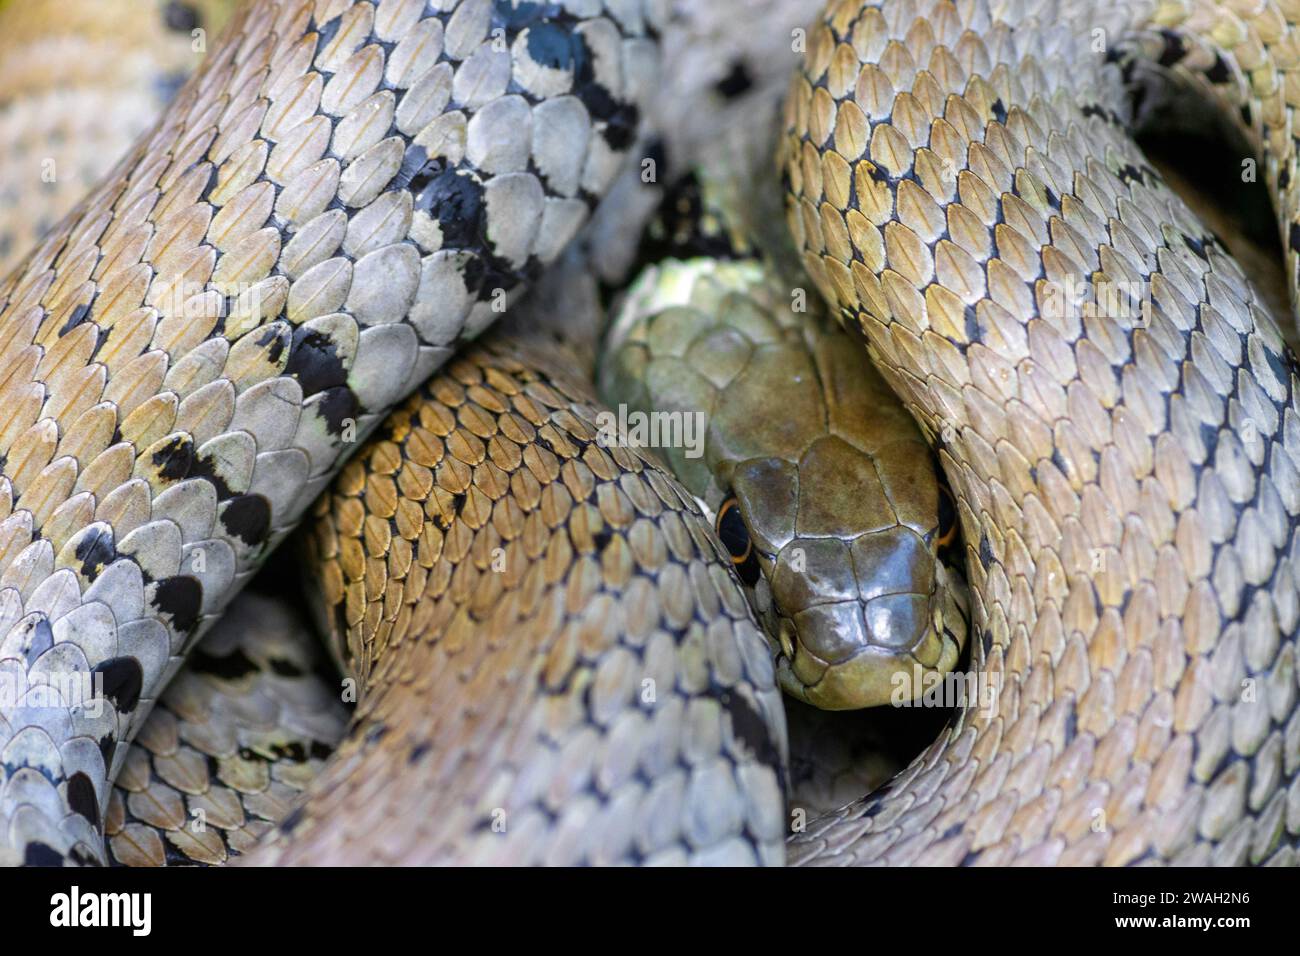 barred grass snake (Natrix natrix helvetica, Natrix helvetica), coiled up, looking toward camera, France, Le Mans Stock Photo